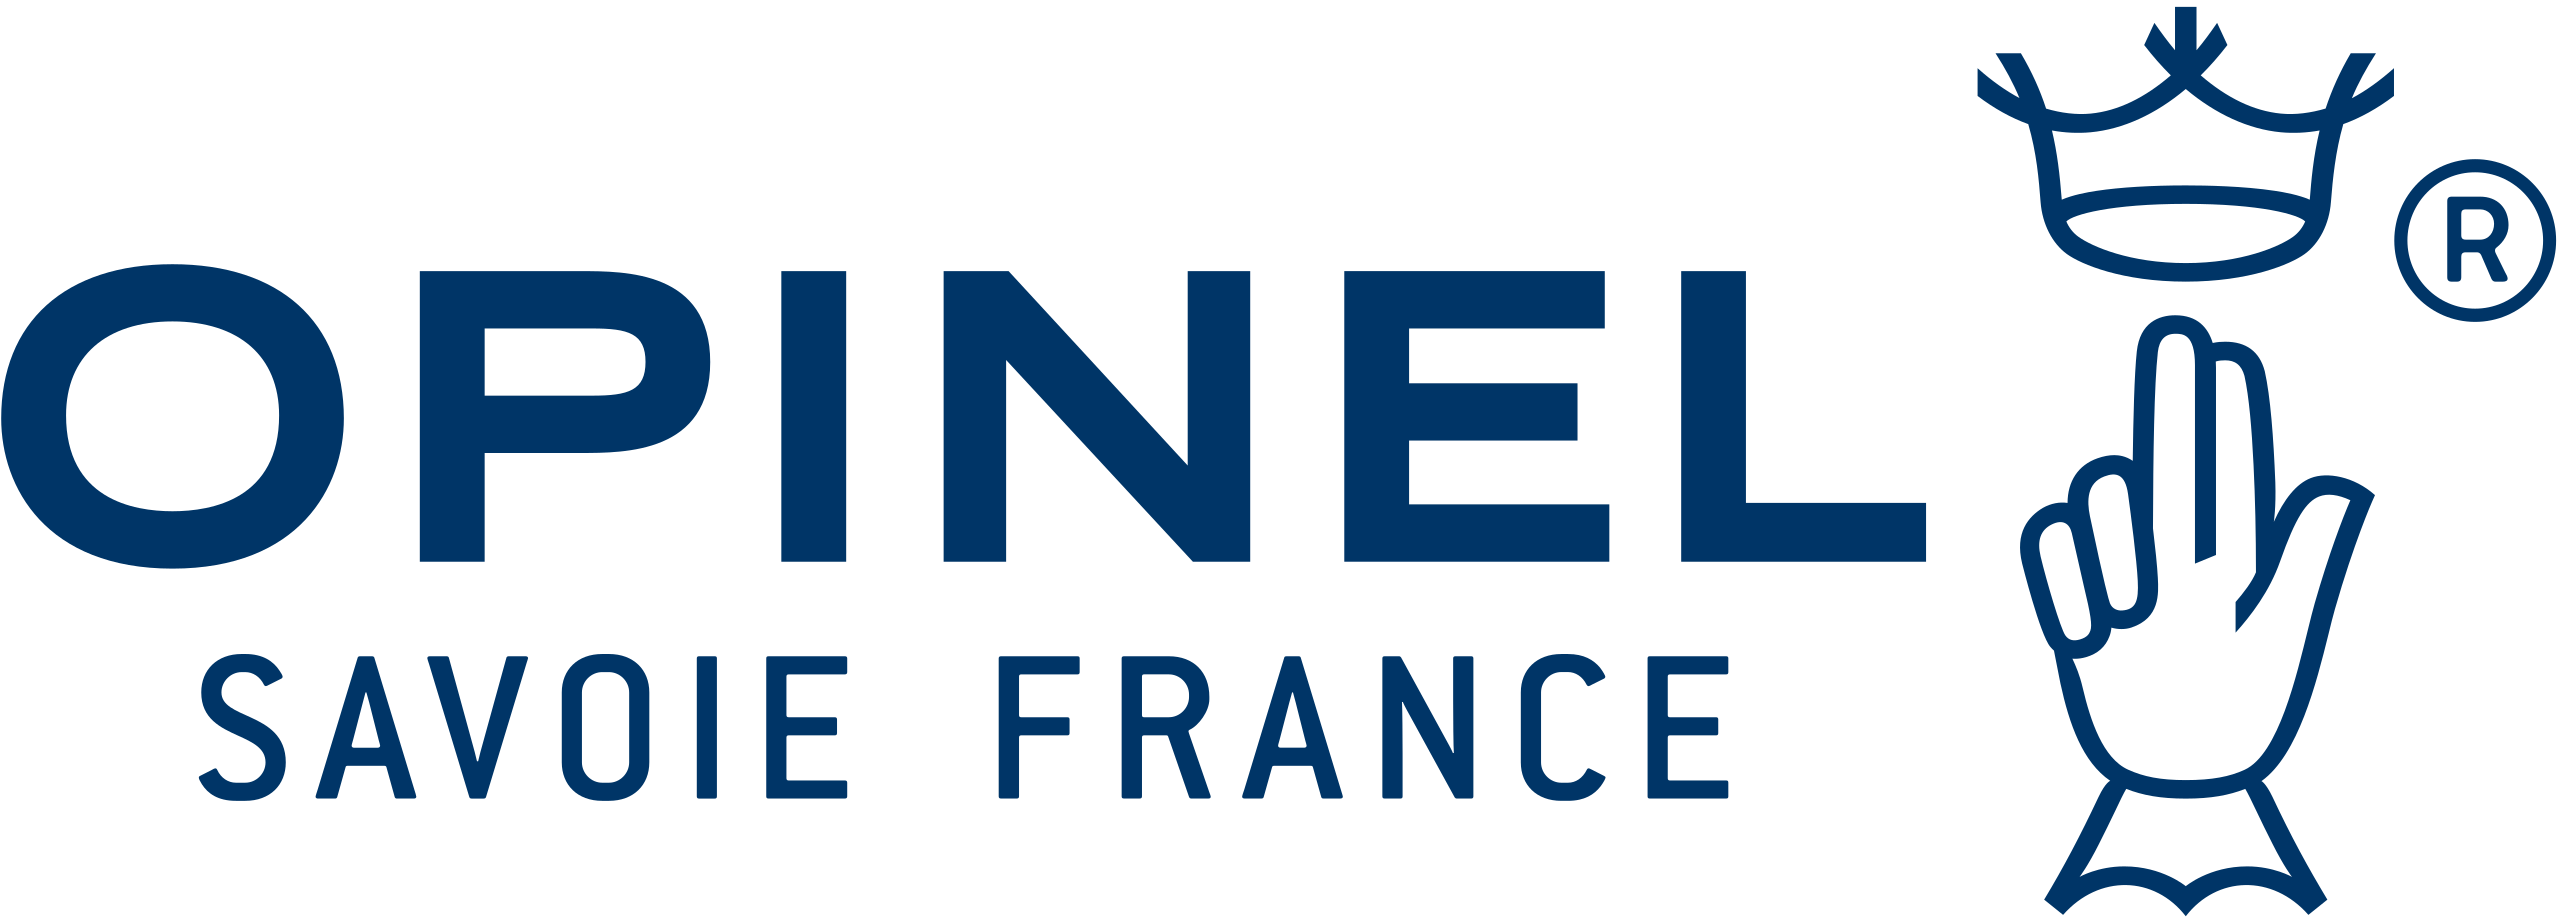 opinel logo